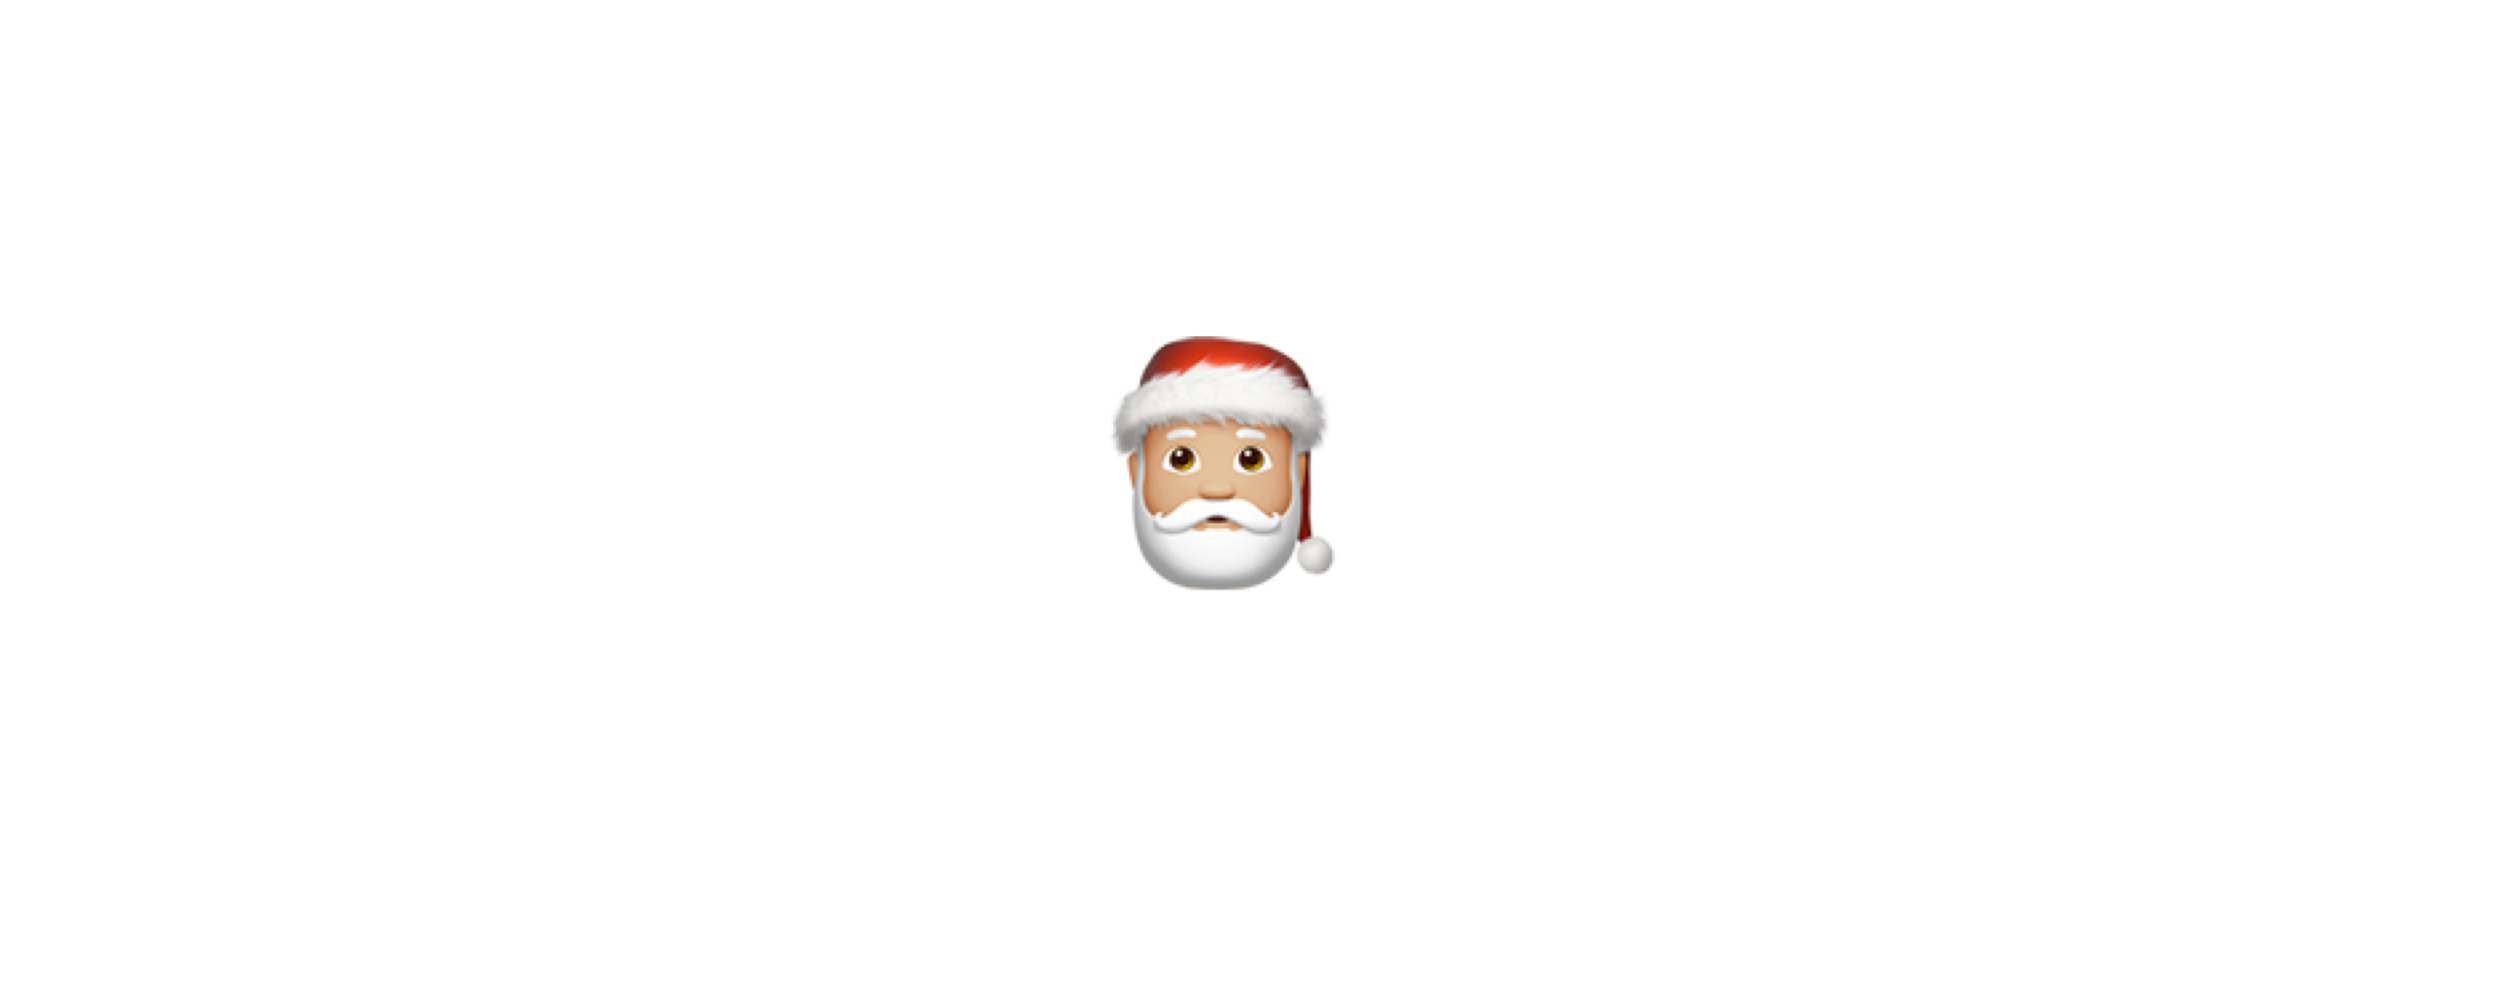 A single Santa Claus emoji